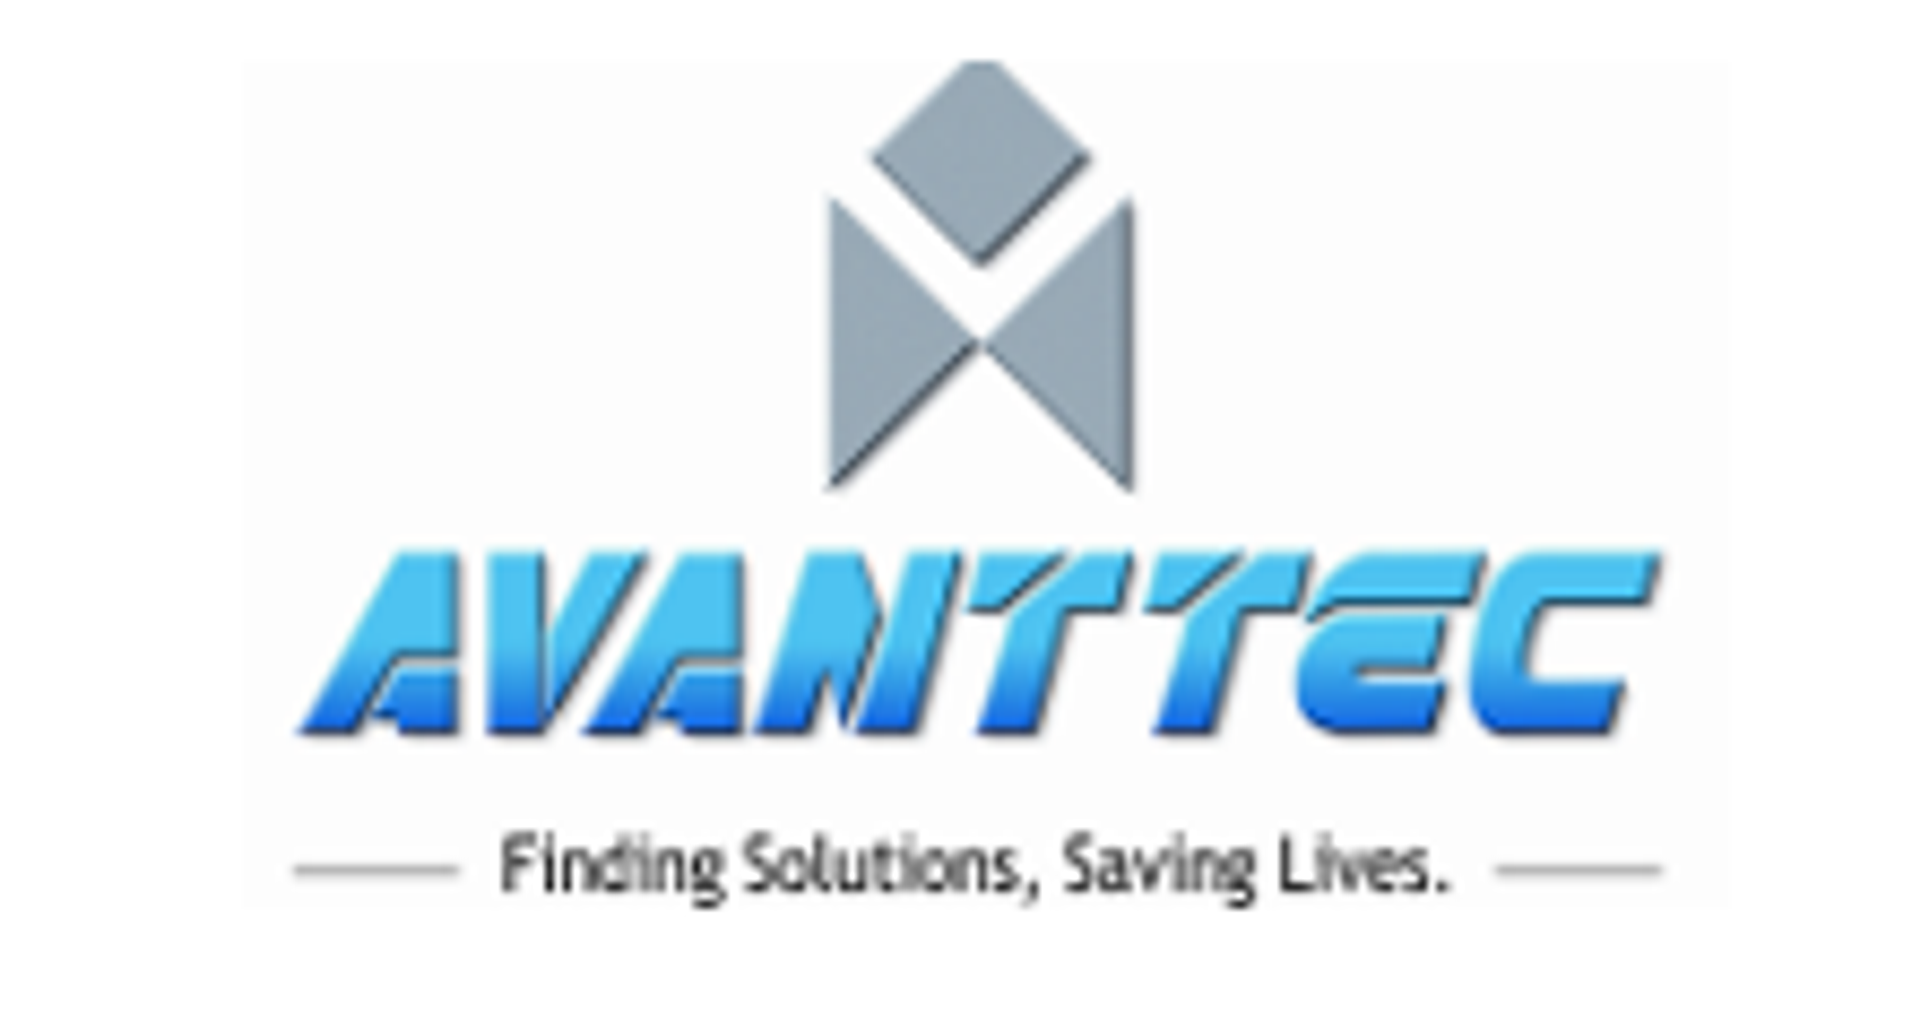 Avanttec Medical Systems Pvt Ltd